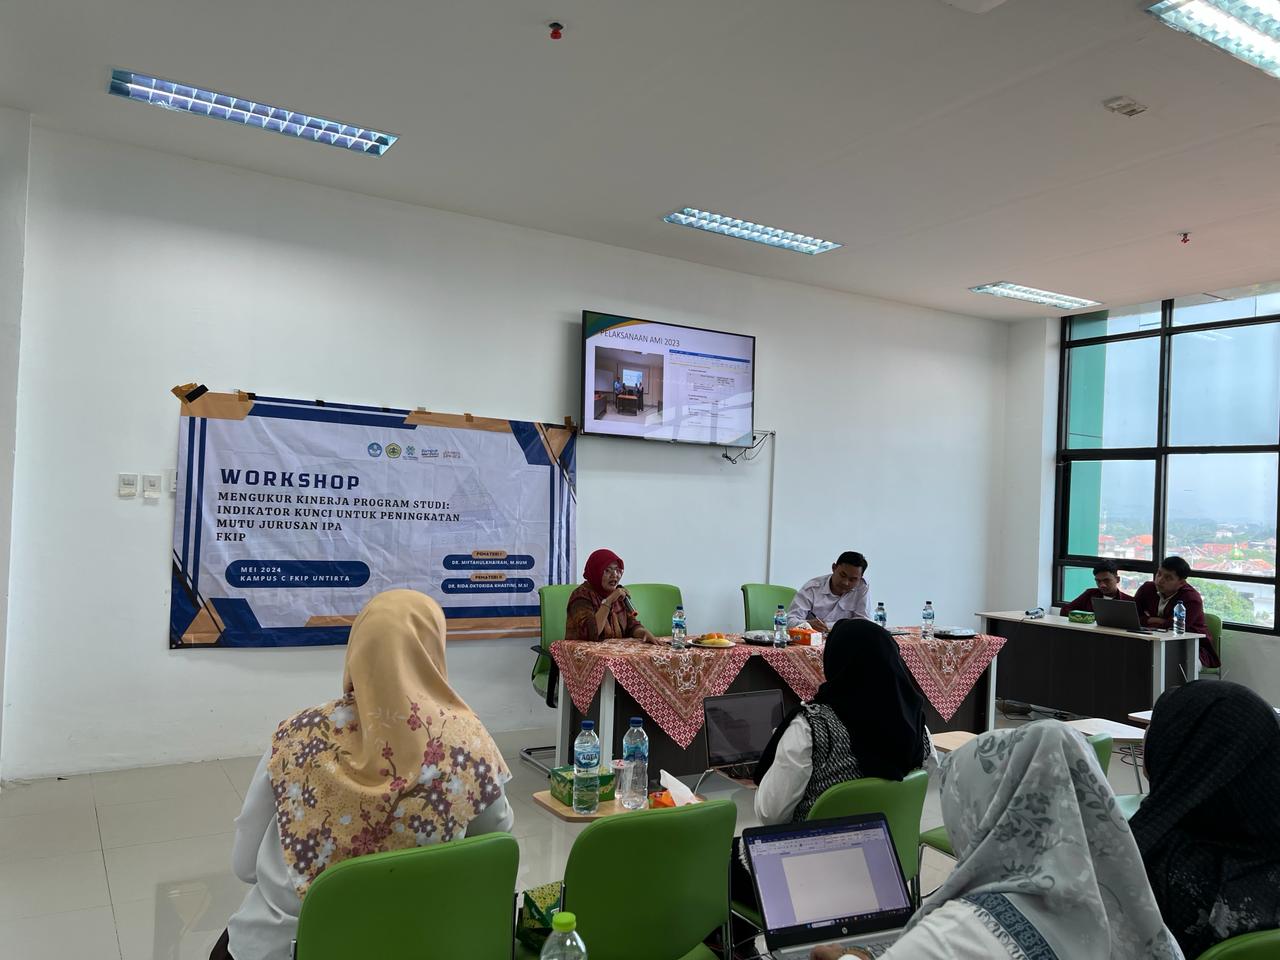 Workshop Mengukur Kinerja Program Studi: Kunci Peningkatan Mutu di FKIP Untirta